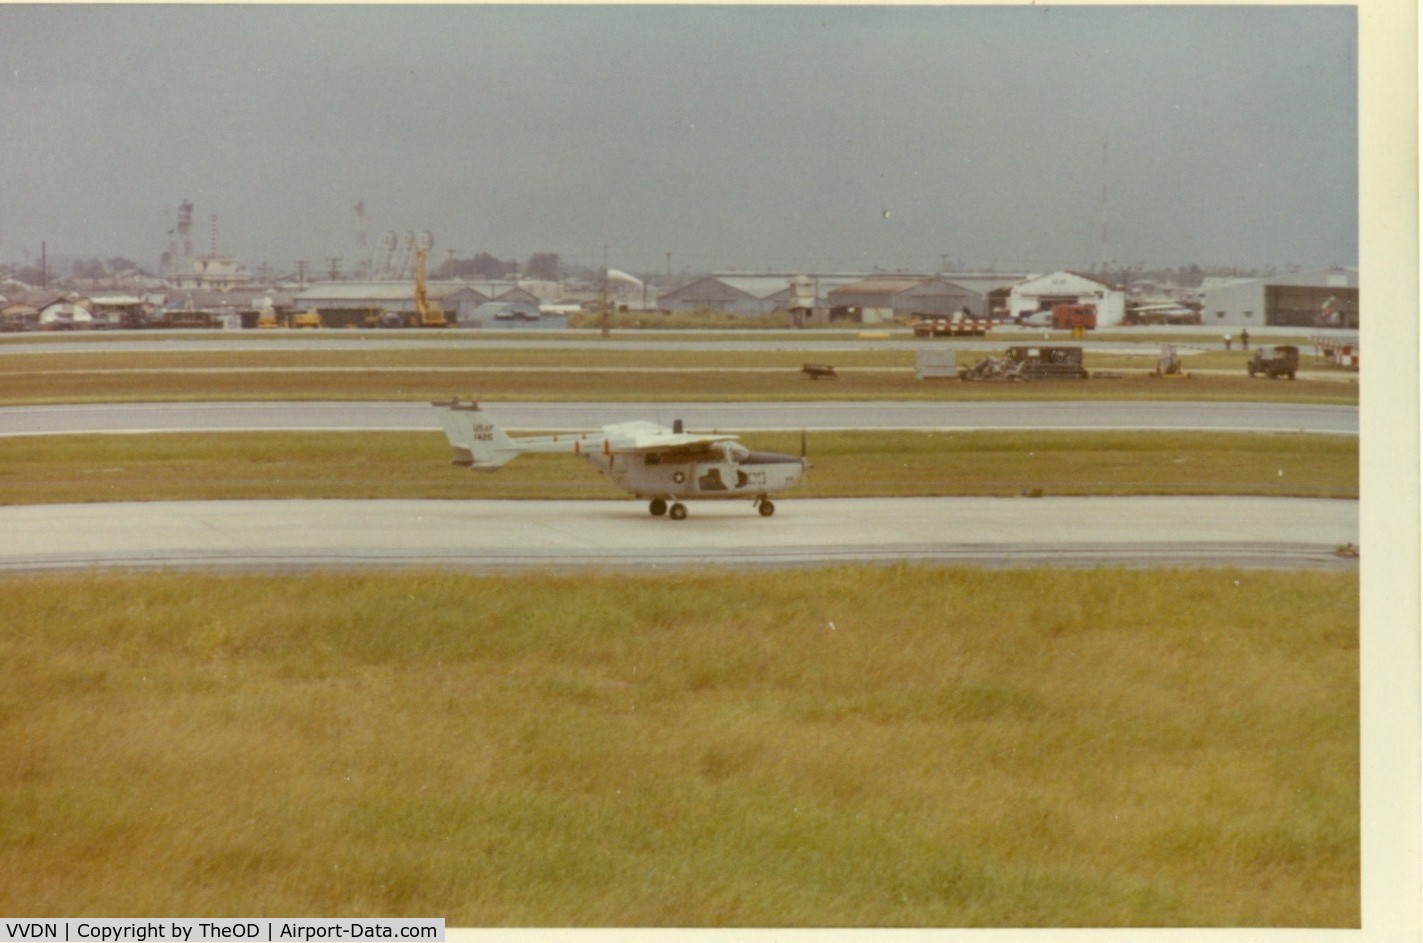 Da Nang International Airport, Da Nang Viet Nam (VVDN) - Taken at Da Nang airbase in 1971. 